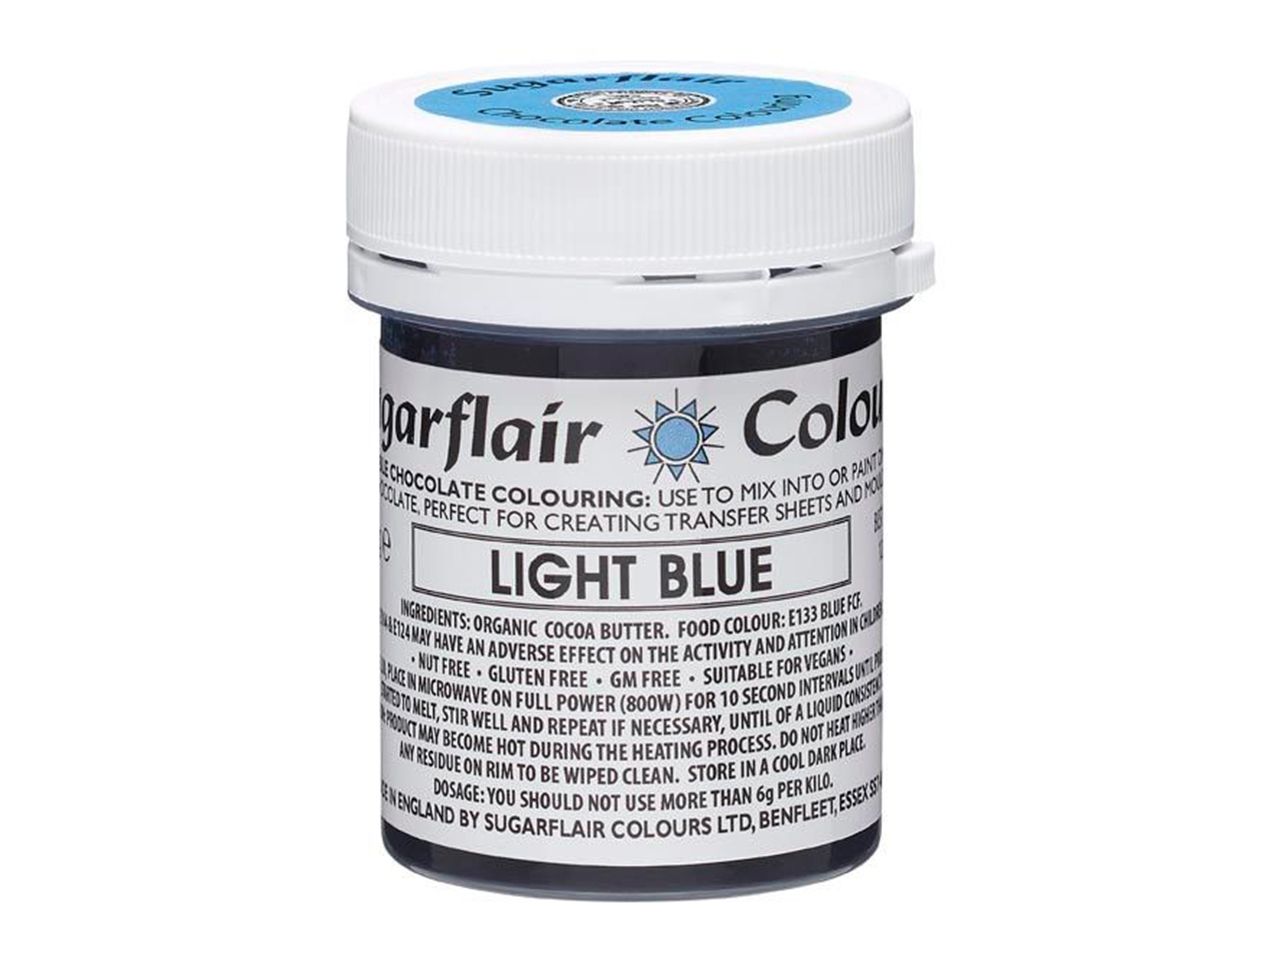 Sugarflair: Schokoladenfarbe Light Blue, Hellblau, 35 g